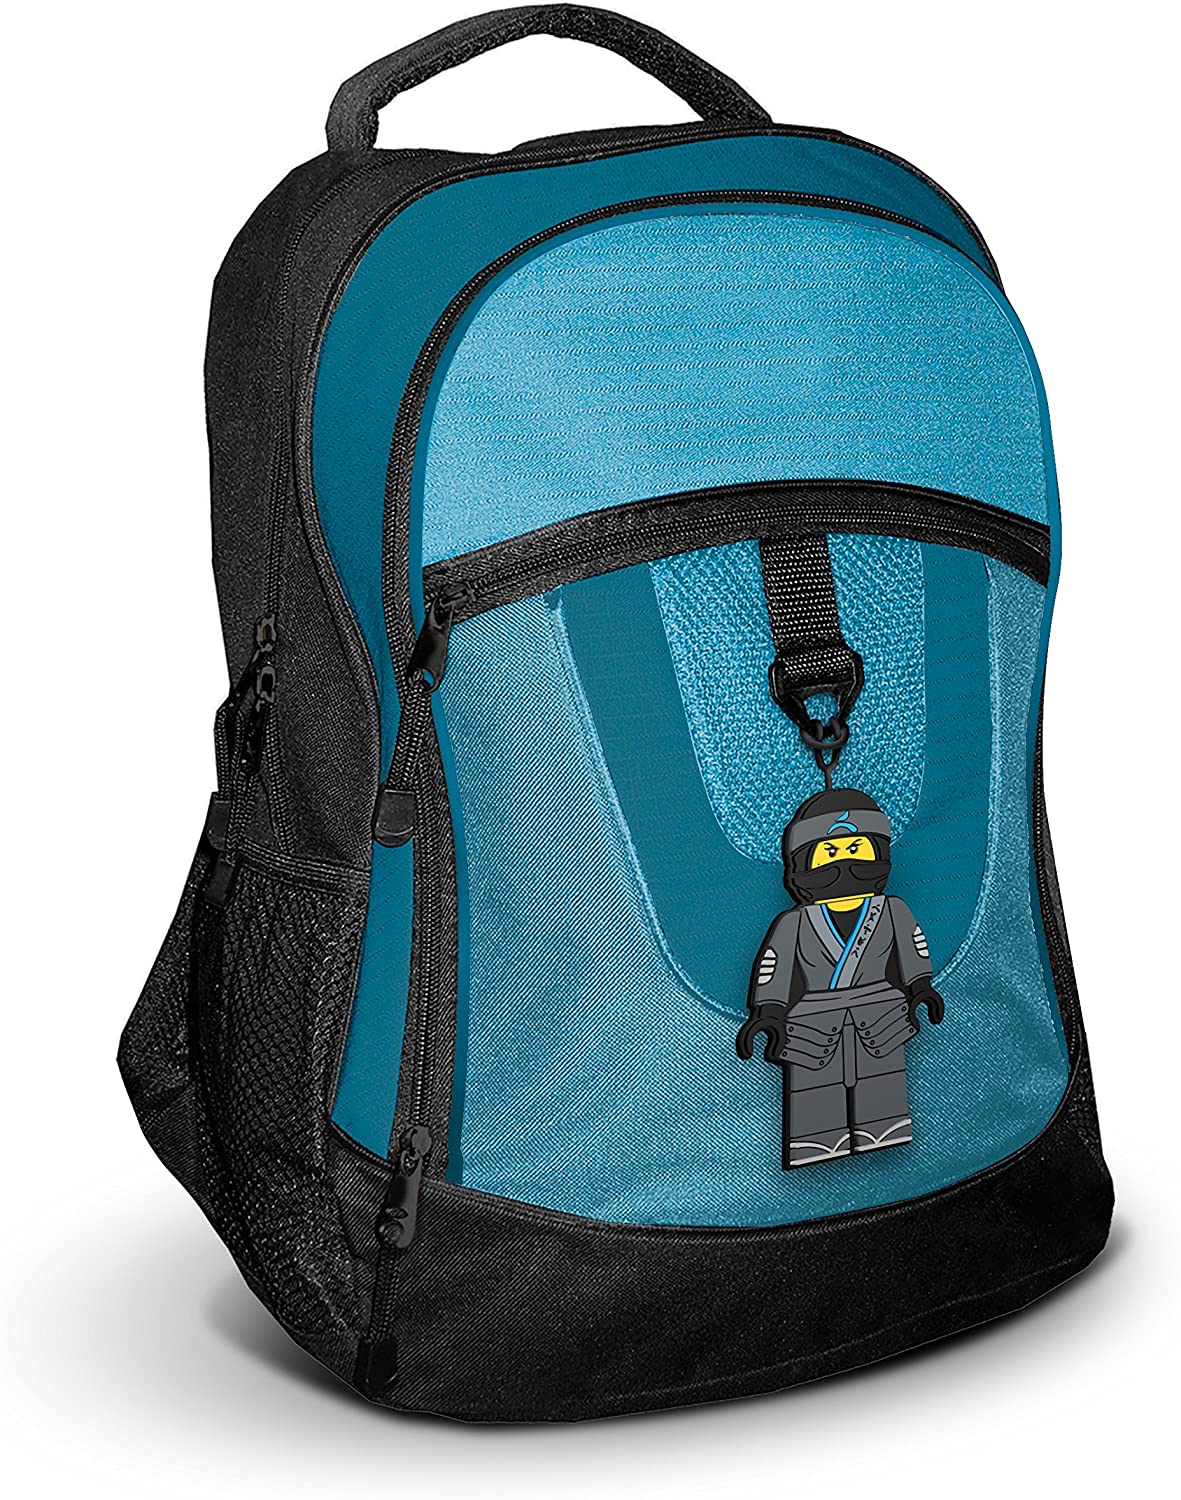 LEGO Ninjago Movie - Nya Luggage Or Backpack Tag, -- ANB Baby